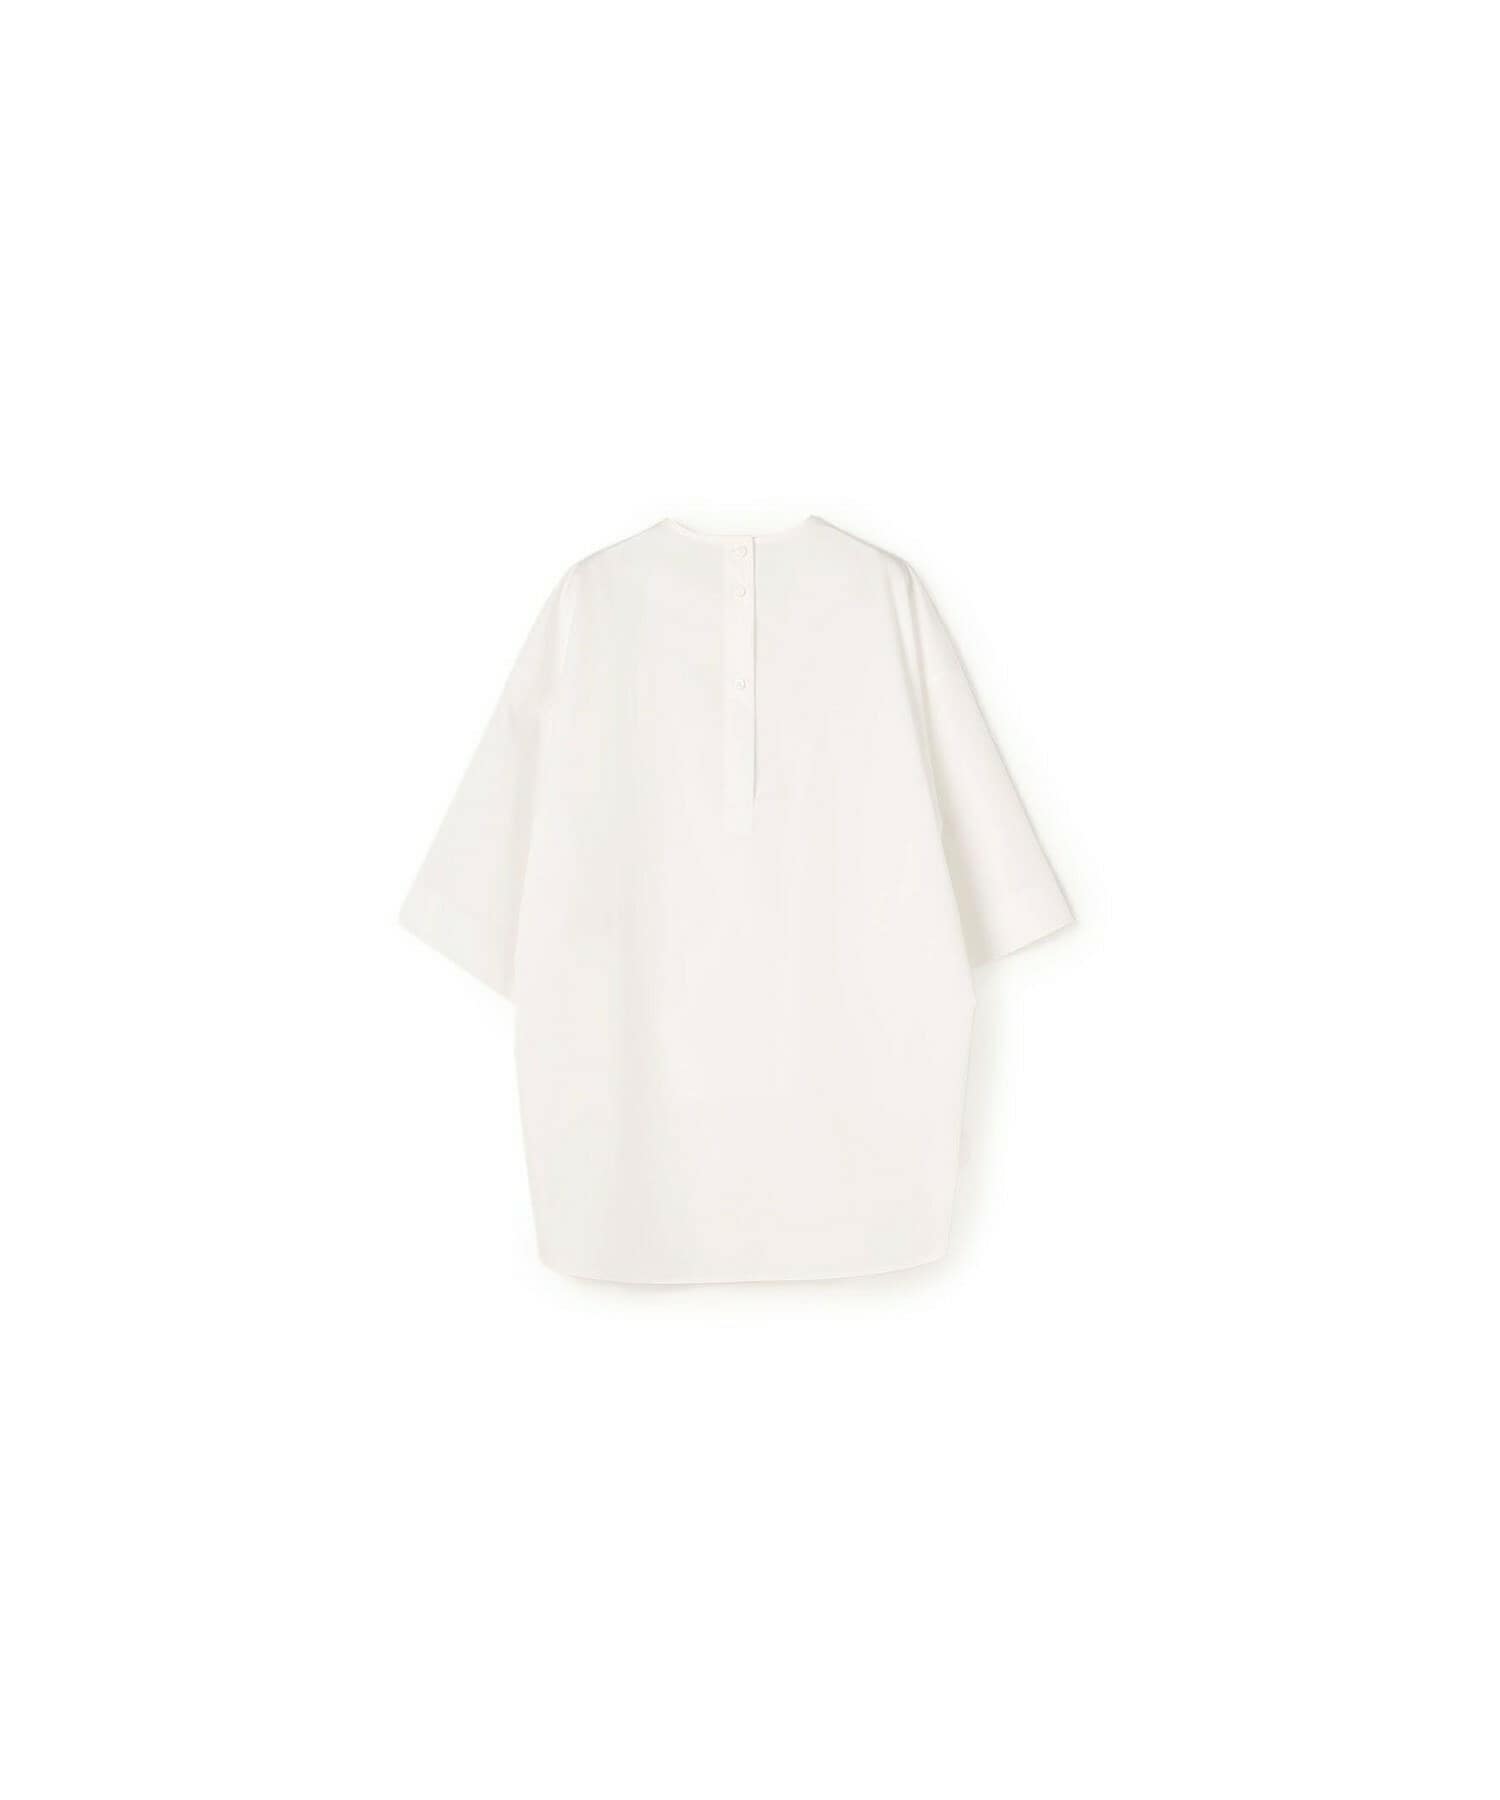 【yoshie inaba】コットンポプリンビッグシルエットシャツ 詳細画像 ホワイト 13